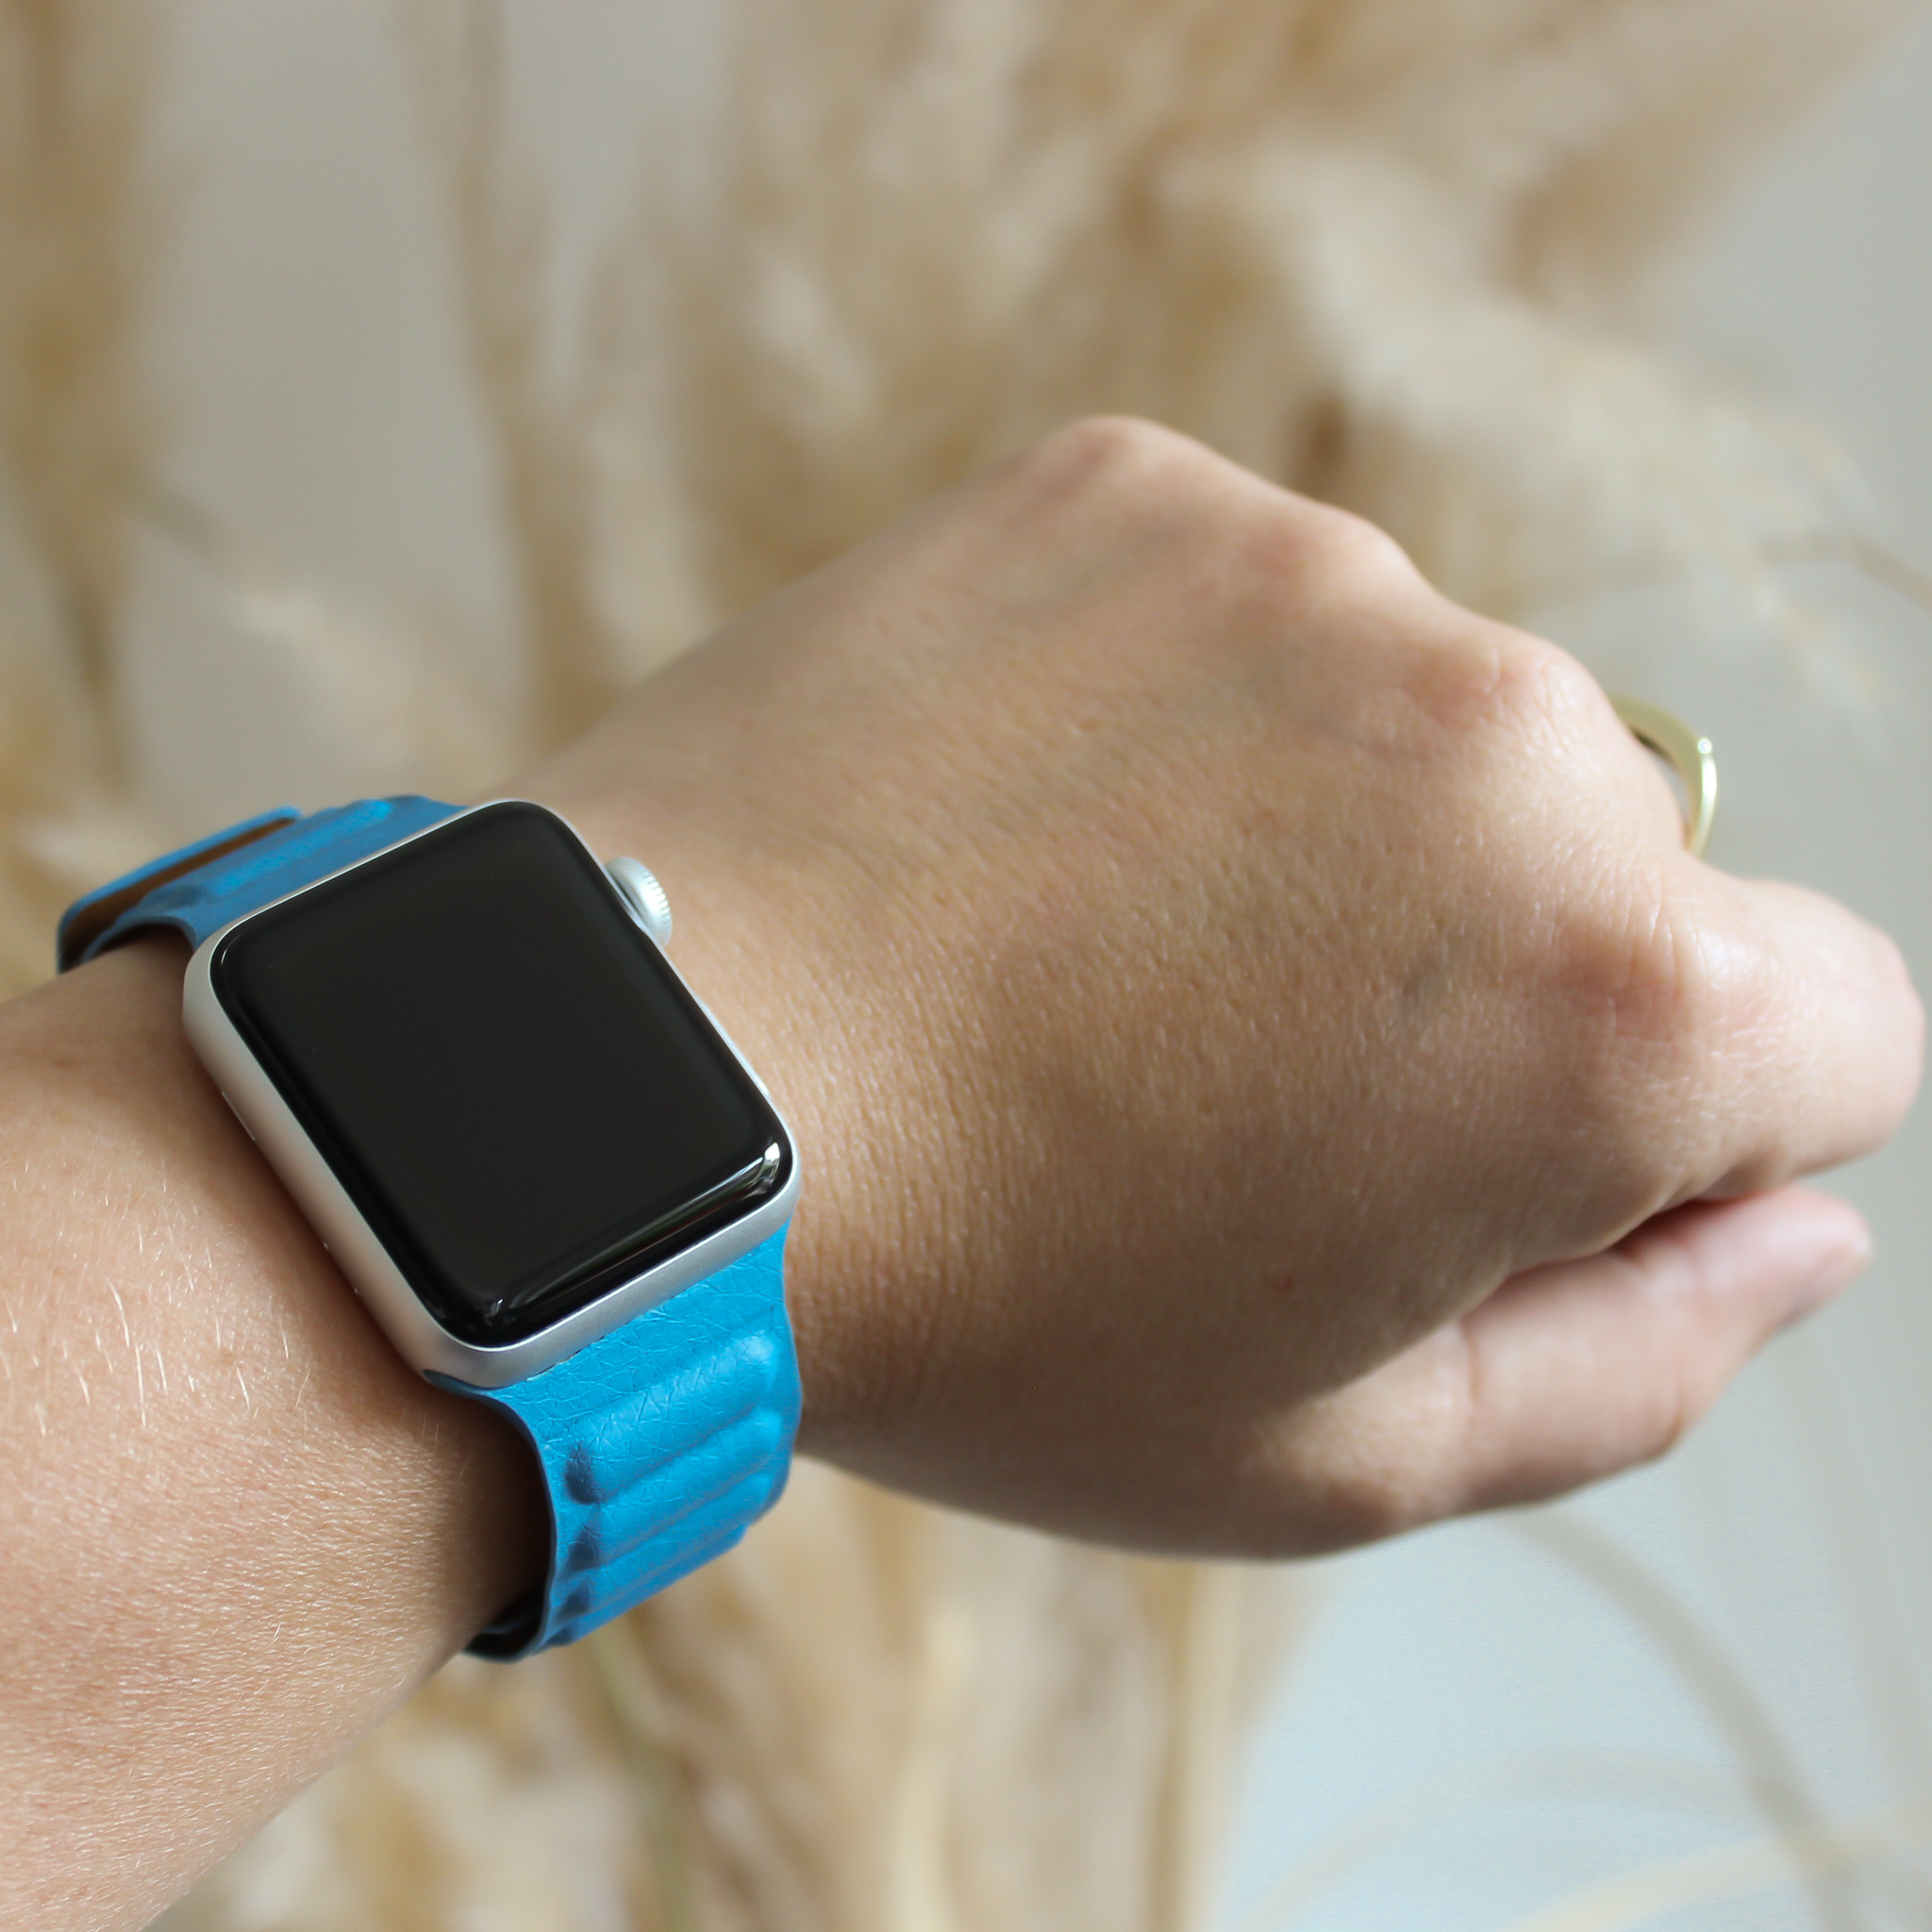 Bracelet en cuir solo Apple Watch - bleu cape